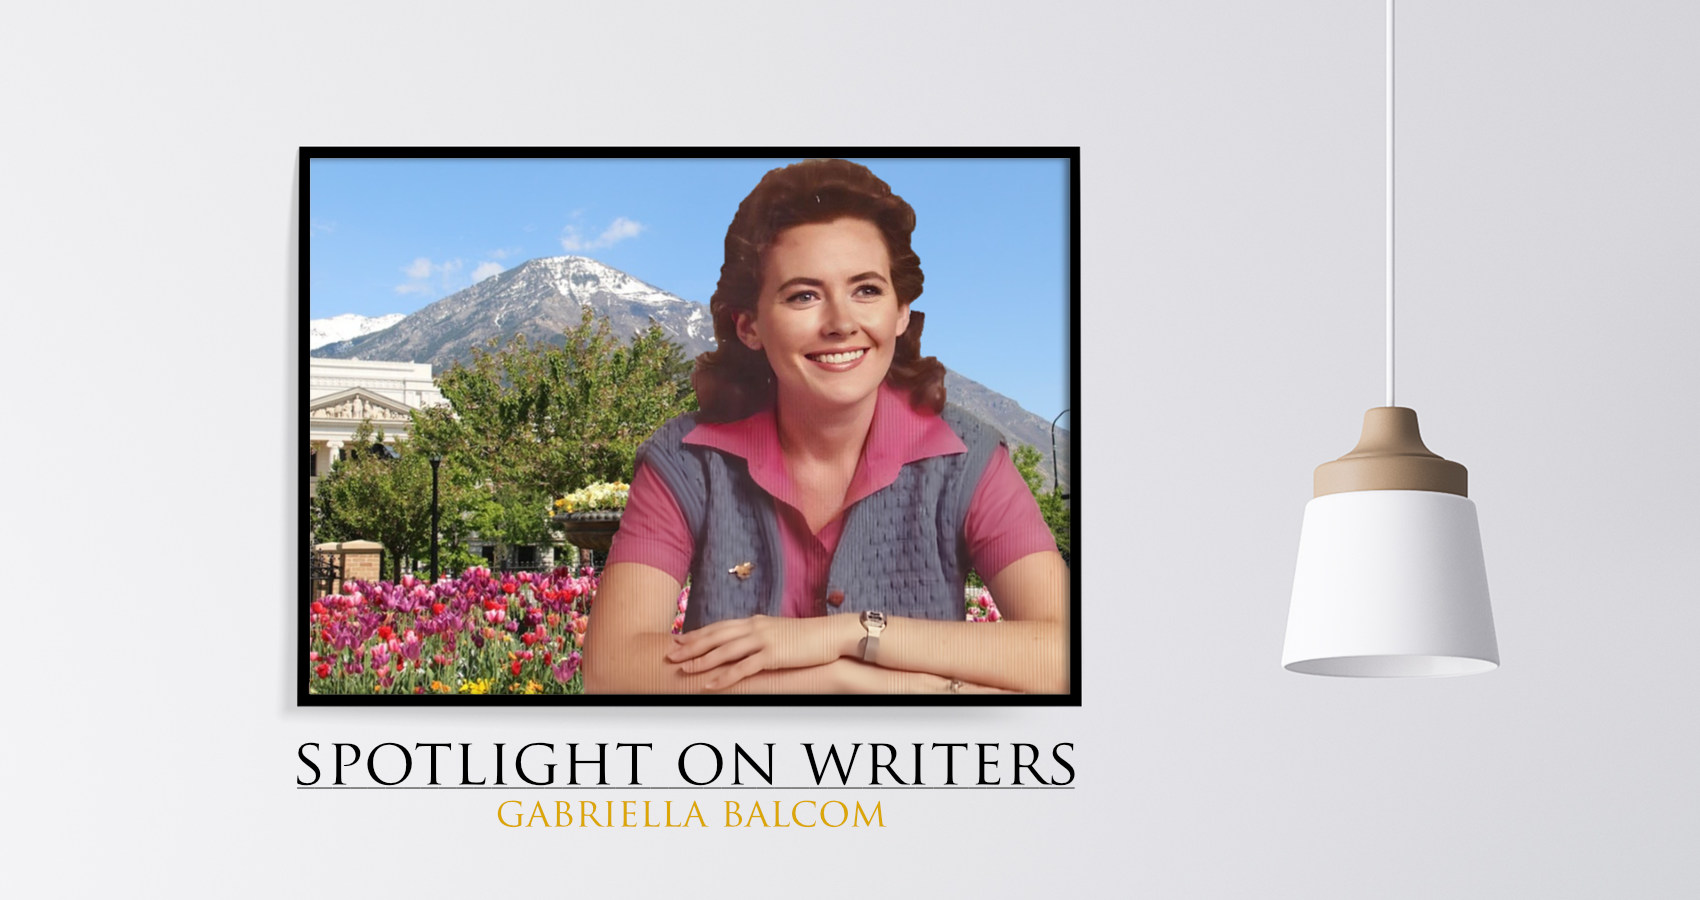 Spotlight On Writers - Gabriella Balcom, interview at Spillwords.com